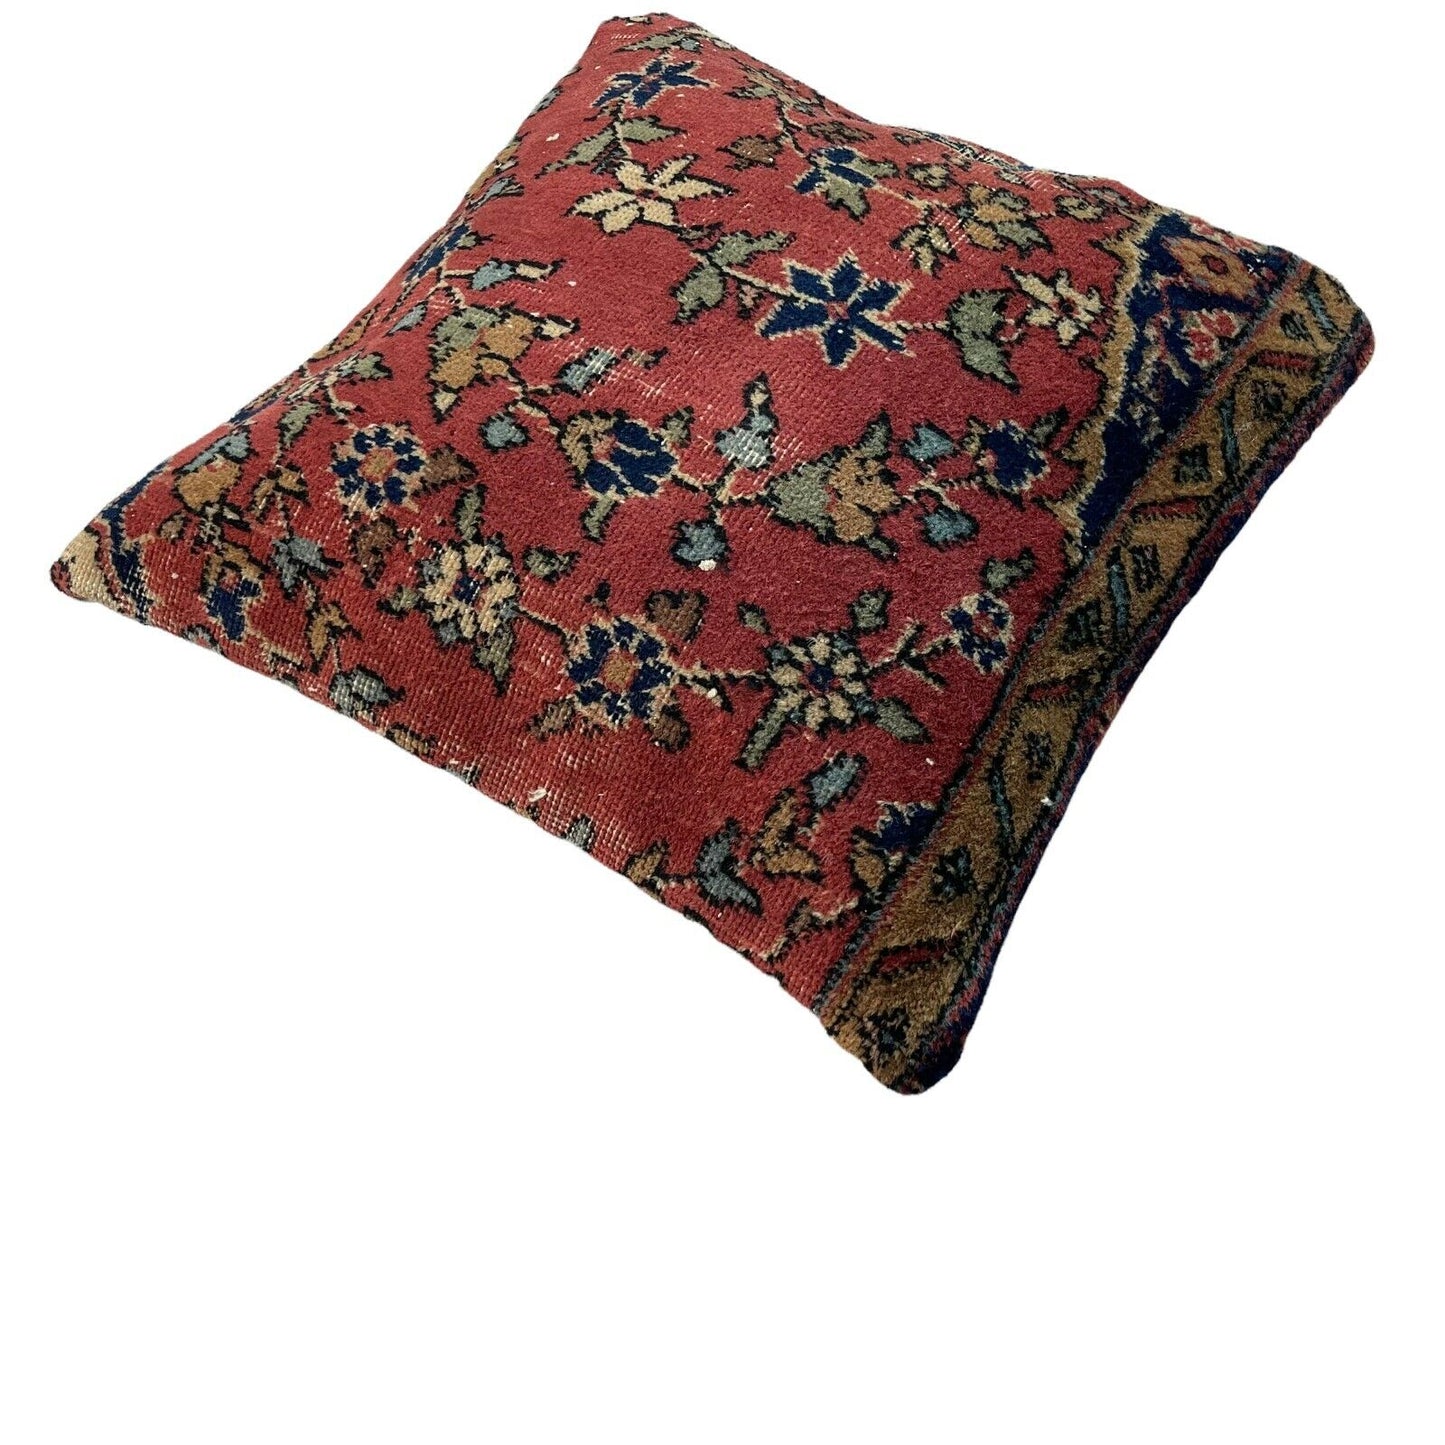 45x45 cm  , Vintage Teppich Kissenbezug , Vintage Rug Cushion Cover